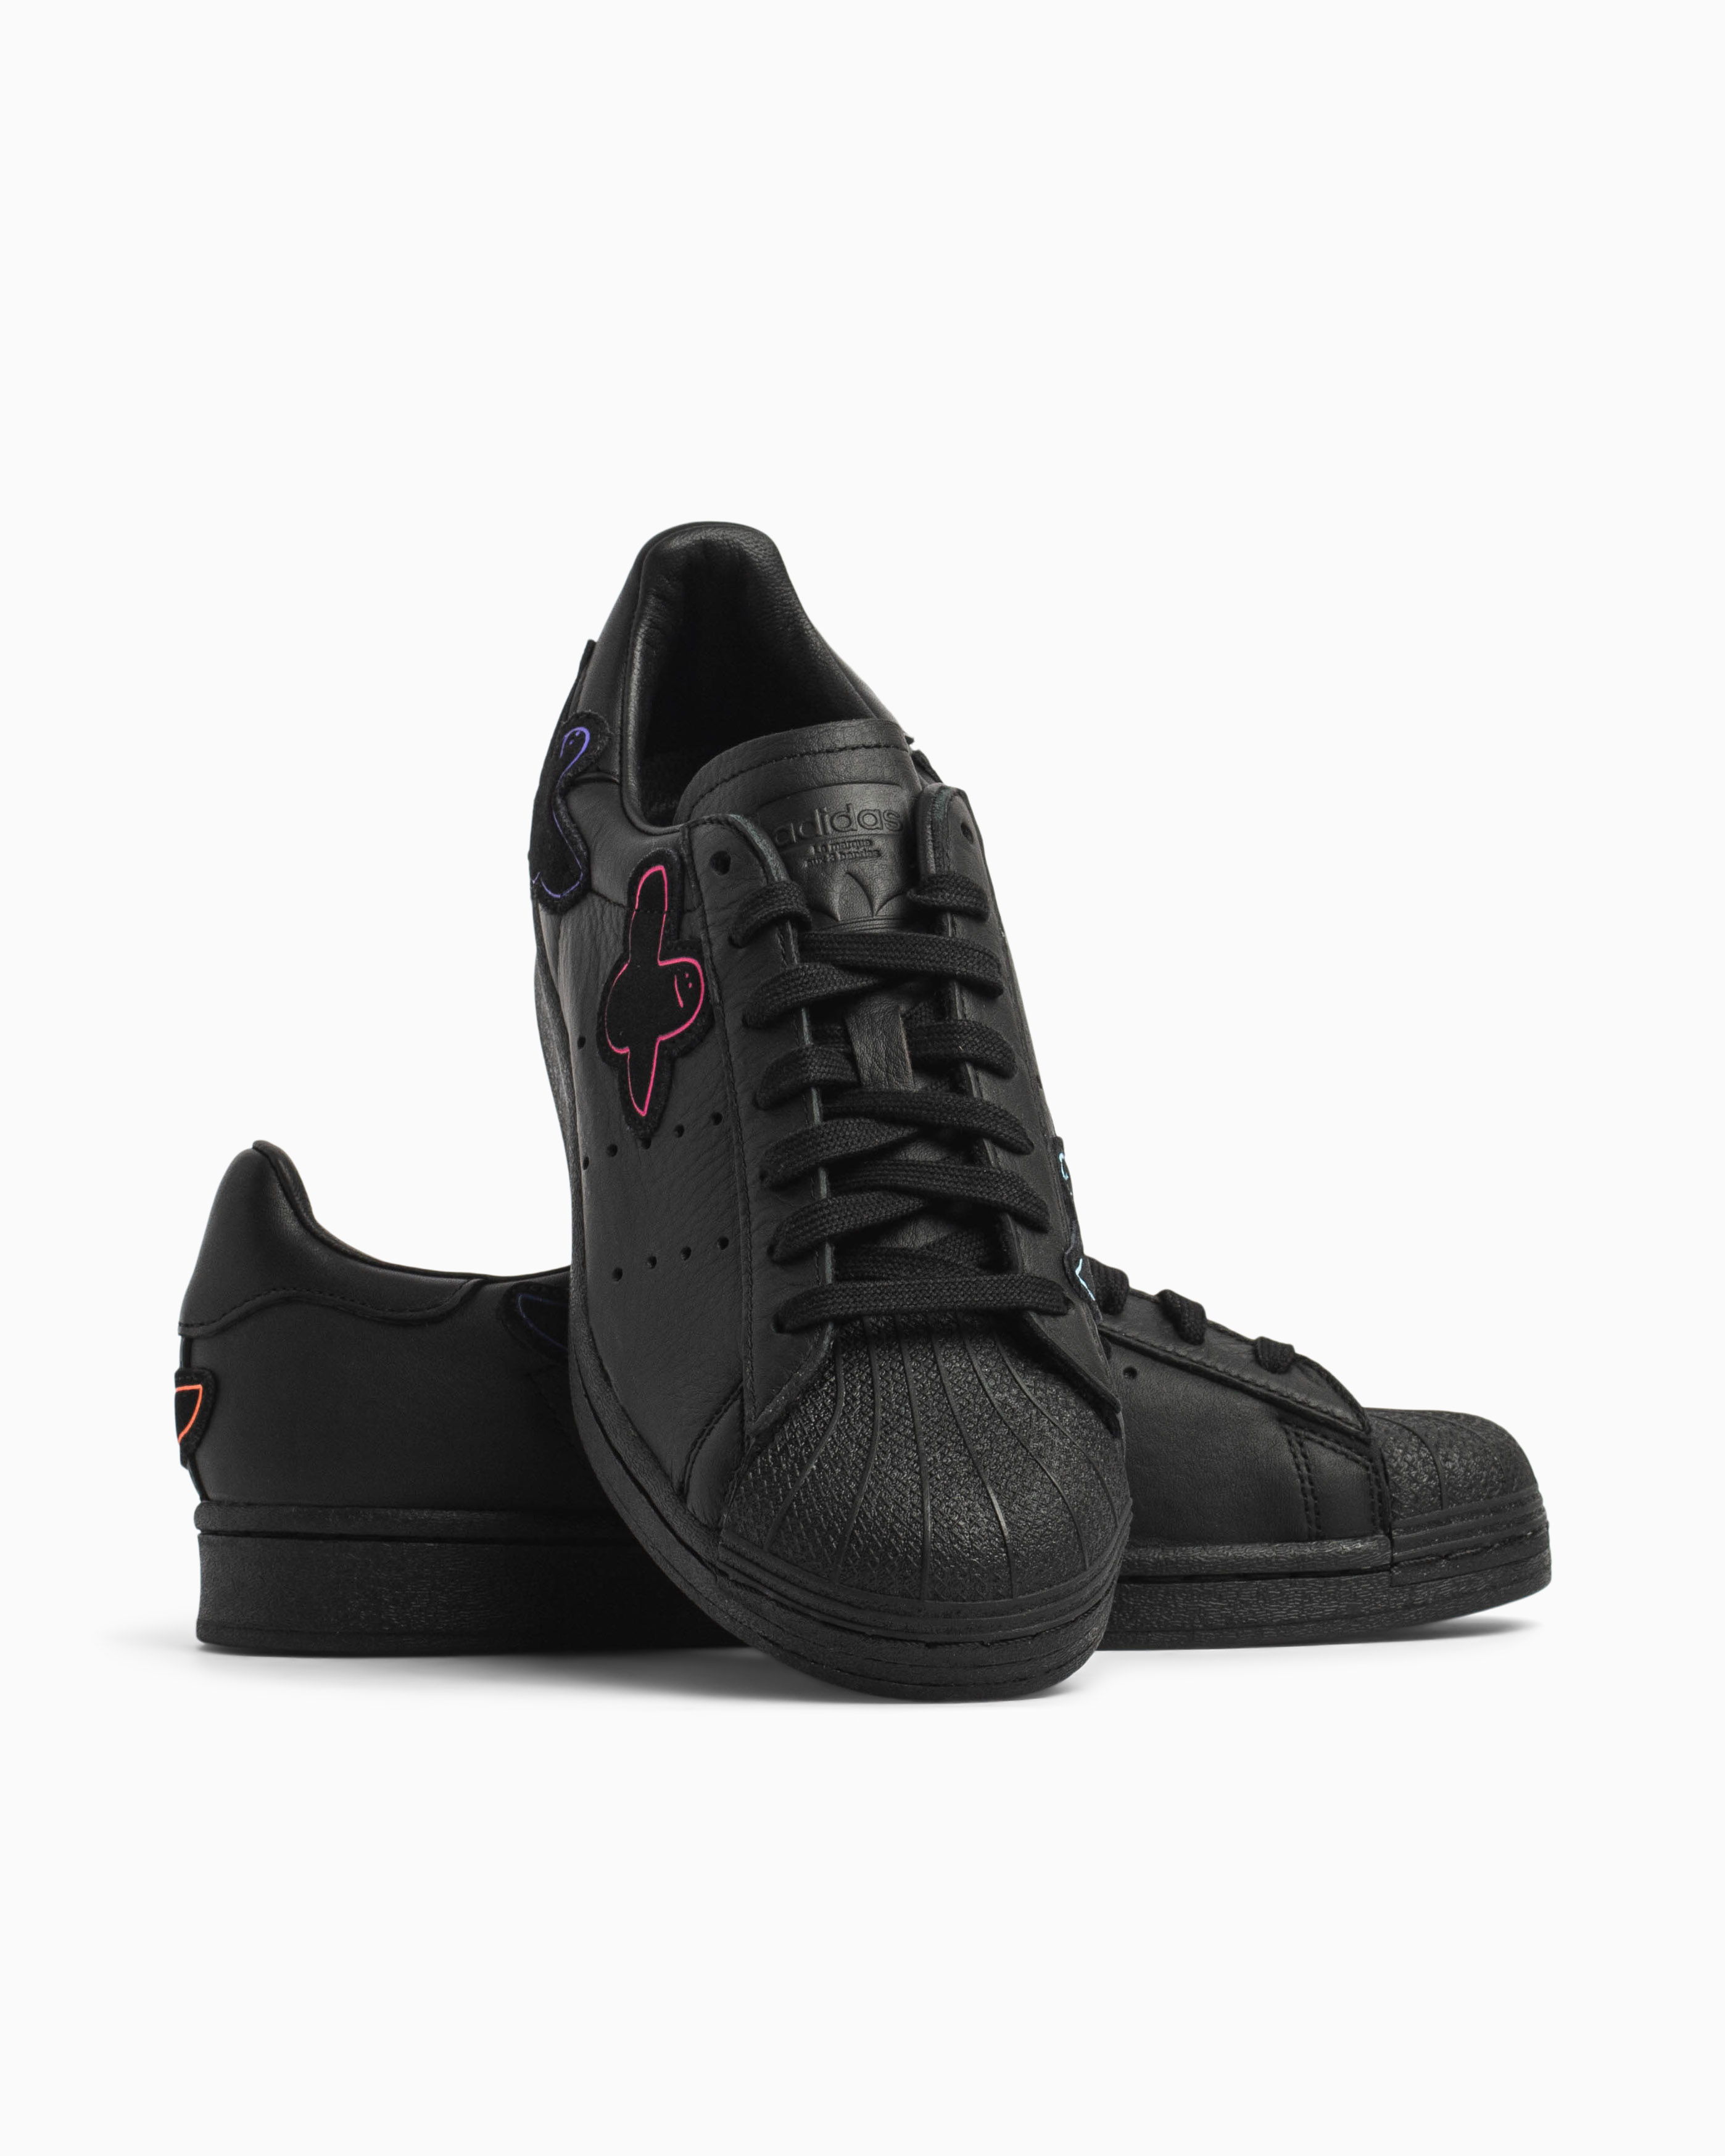 Superstar ADV x Gonz adidas Footwear Sneakers Black